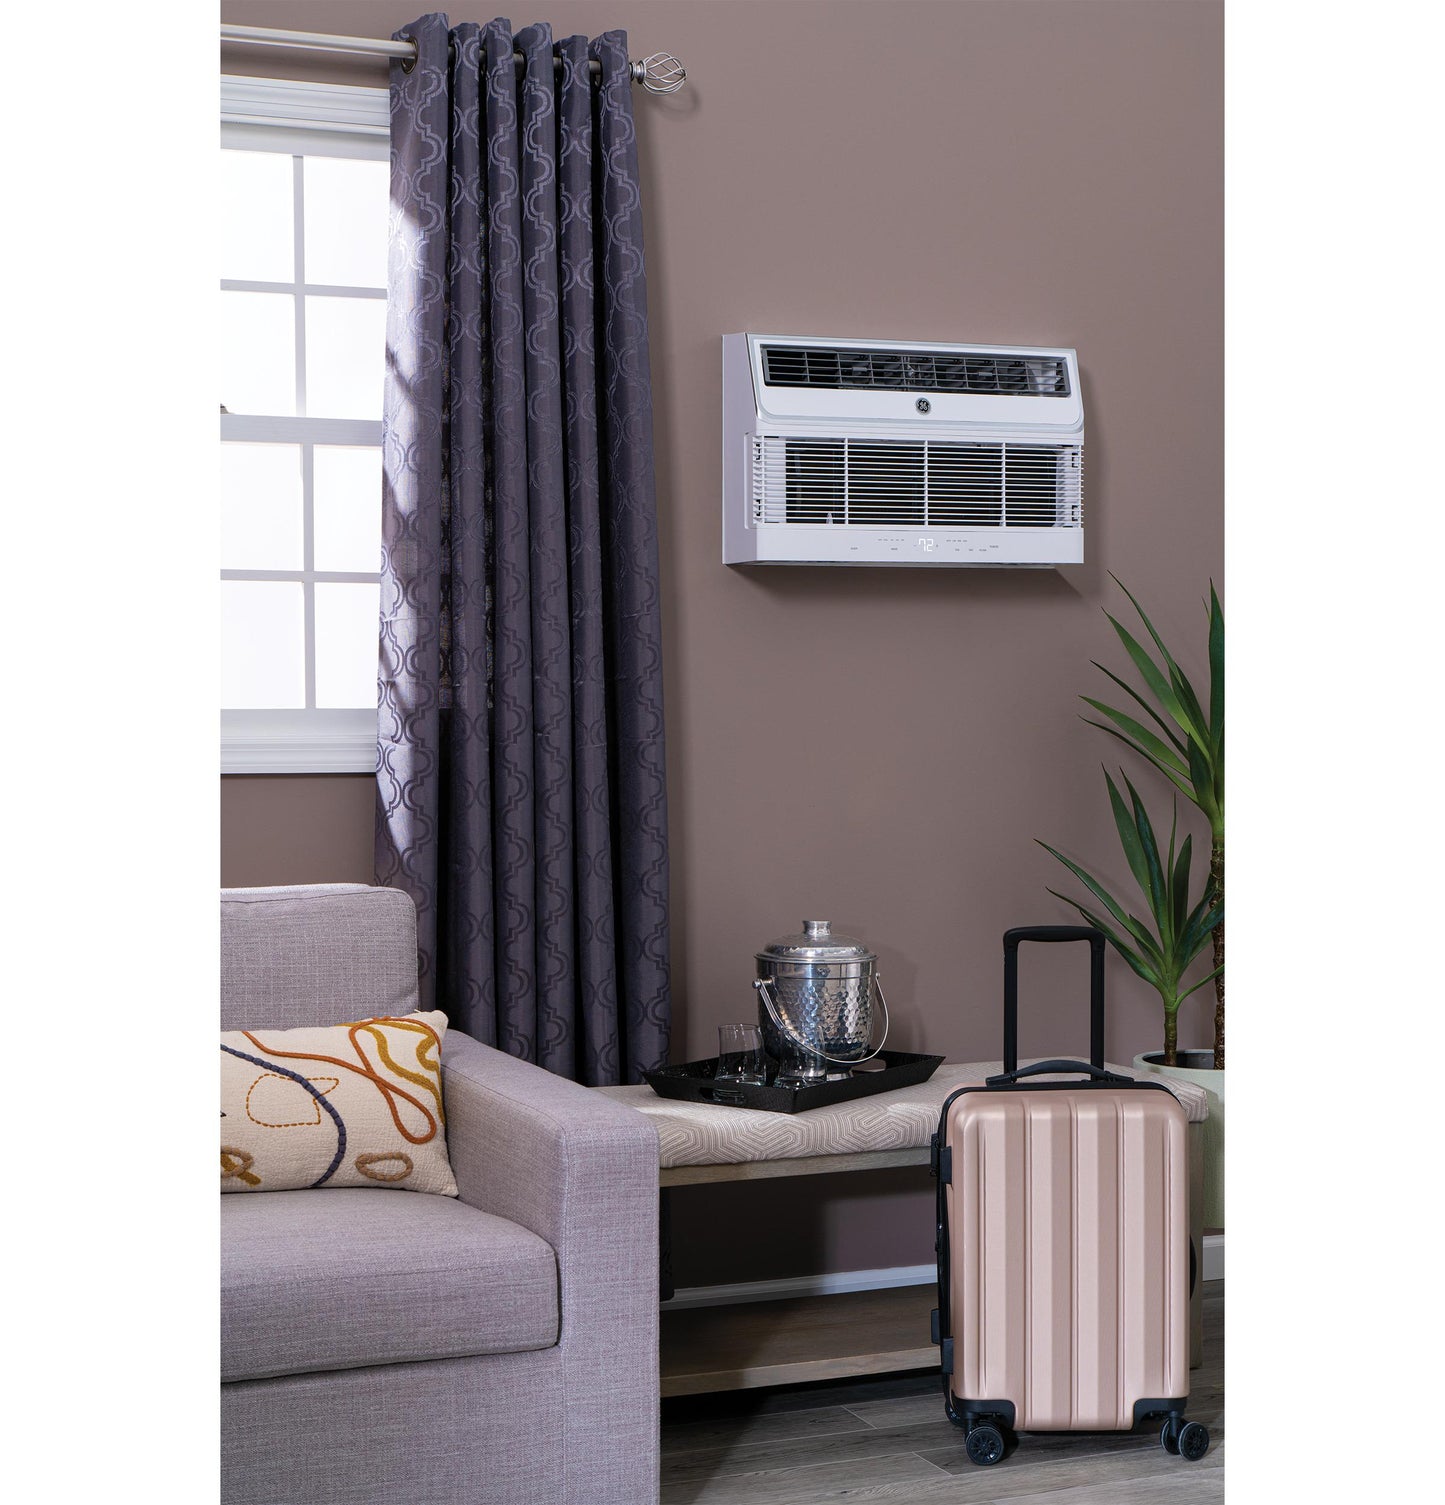 Ge Appliances AJEM12DWJ Ge® 230/208 Volt Built-In Heat/Cool Room Air Conditioner